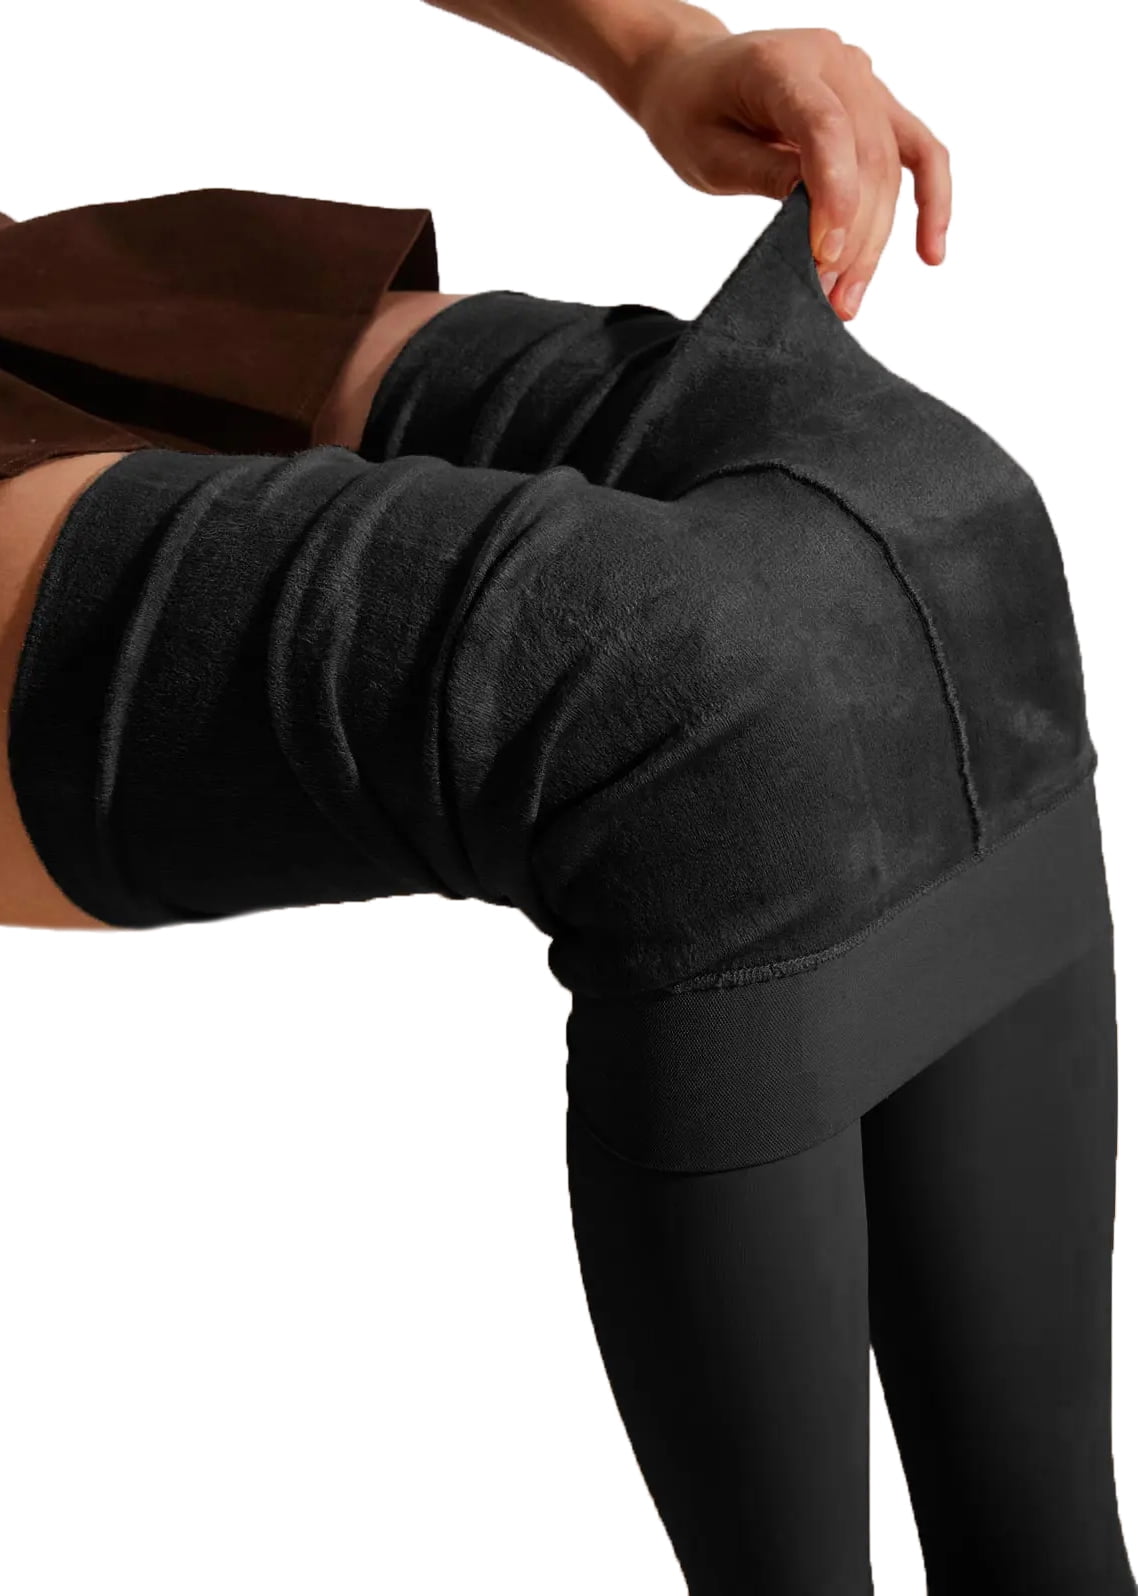 Nihsatin Women's Winter Warm Stretchy Thermal Leggings Pants Fleece ...